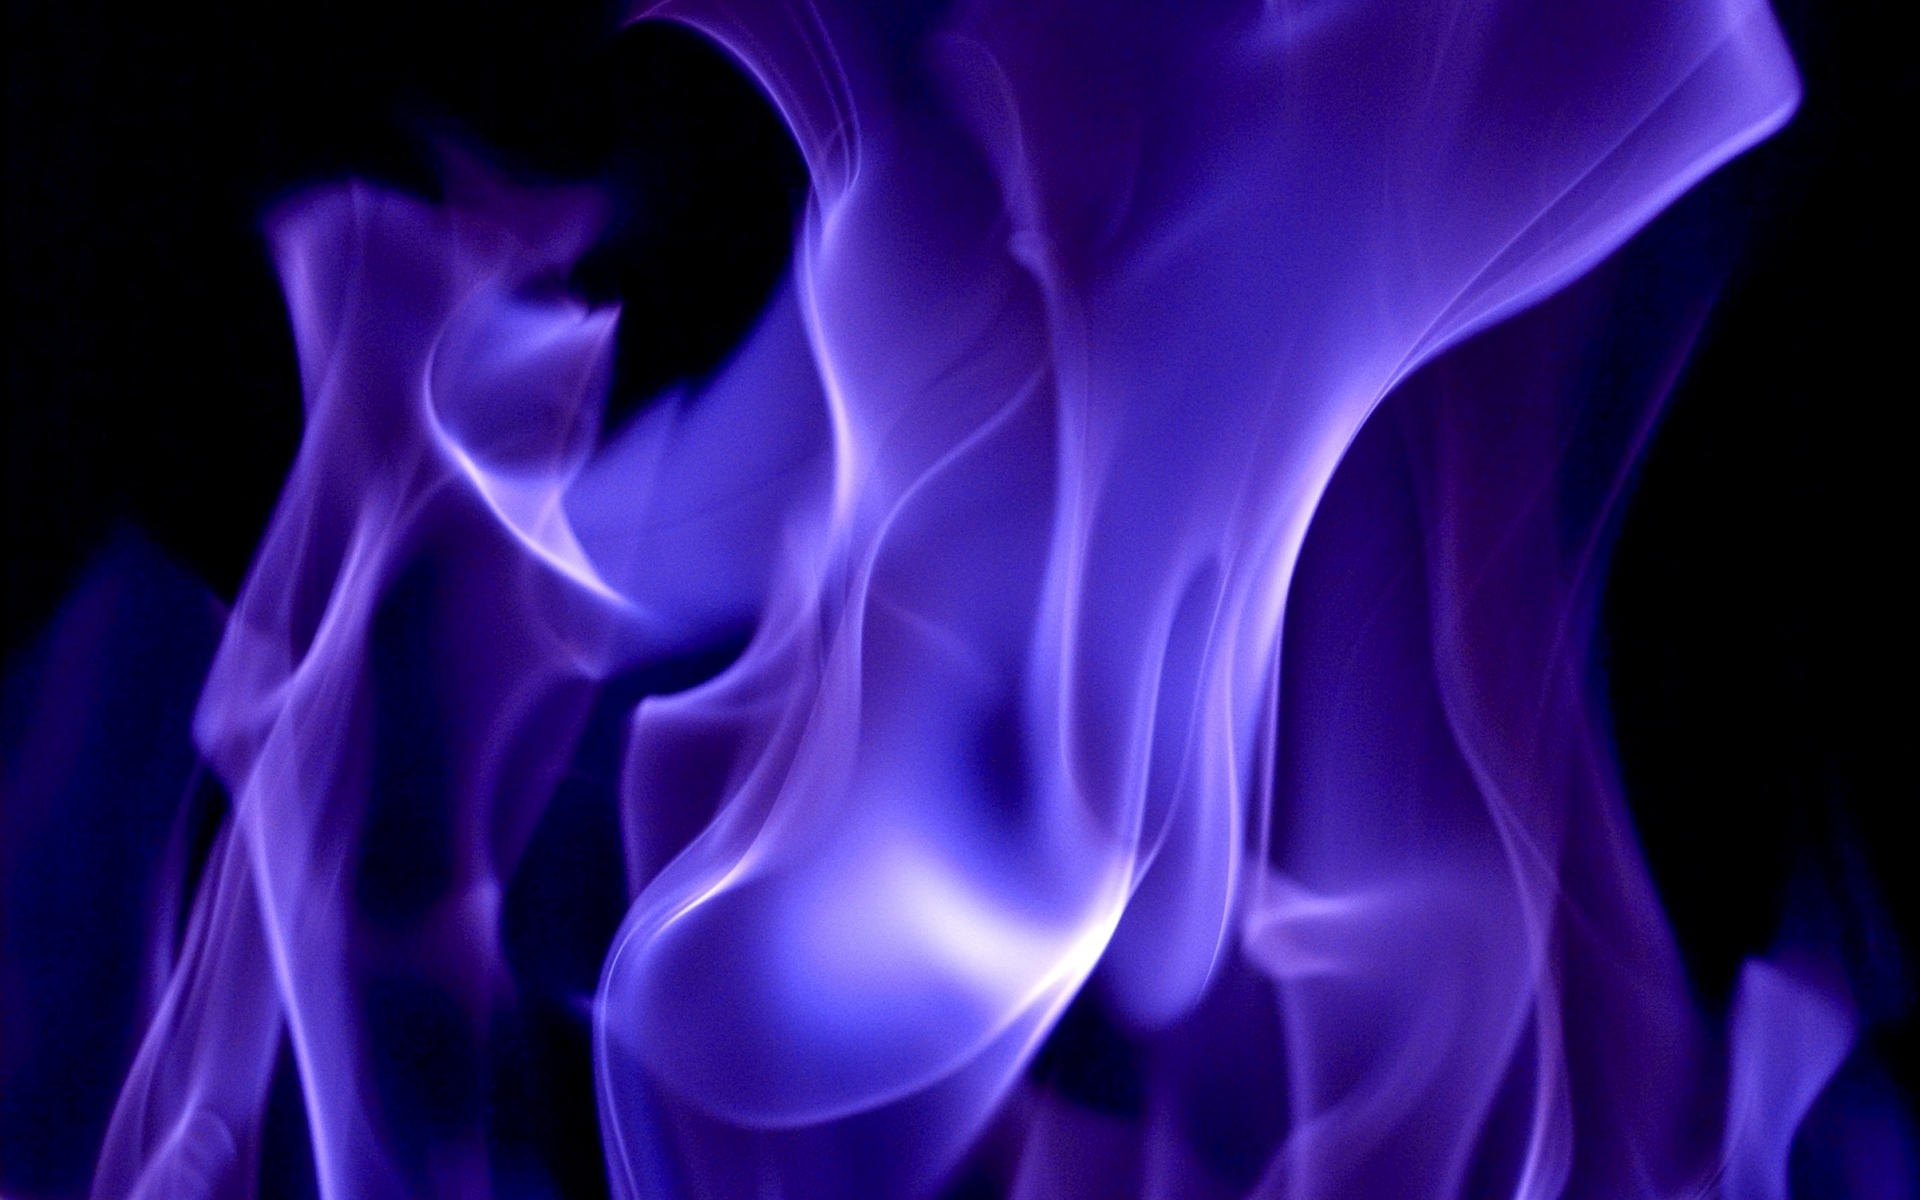 violet flame, abstraction, background, fire, texture, macro, фиолетовое пламя, абстракция, фон, огонь, текстура, макро